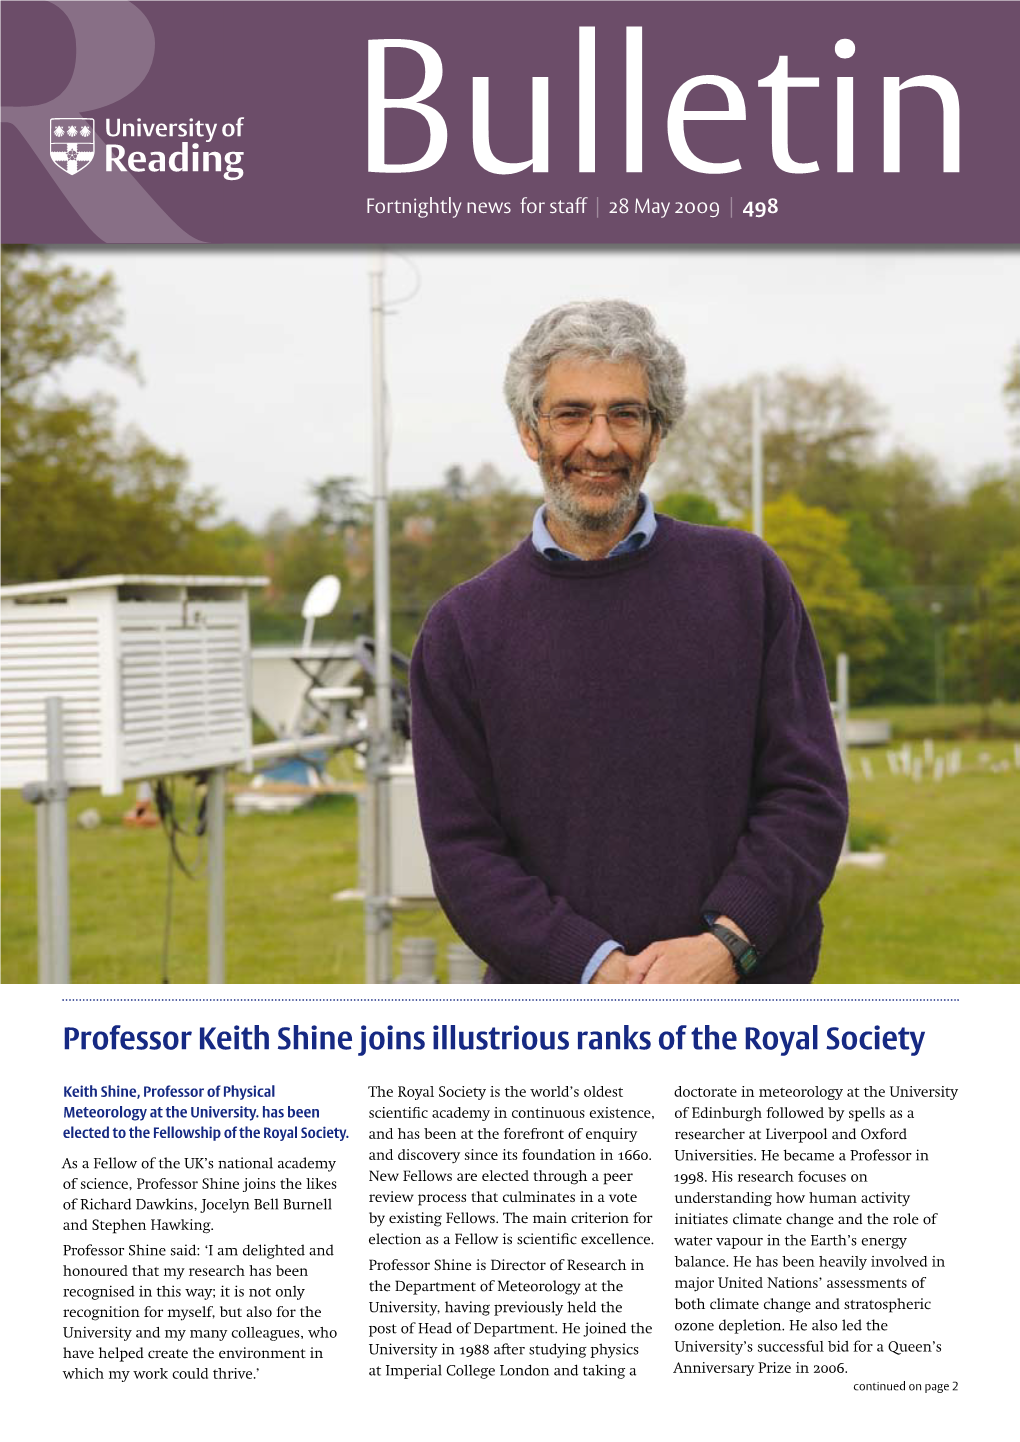 Professor Keith Shine Joins Illustrious Ranks of the Royal Society